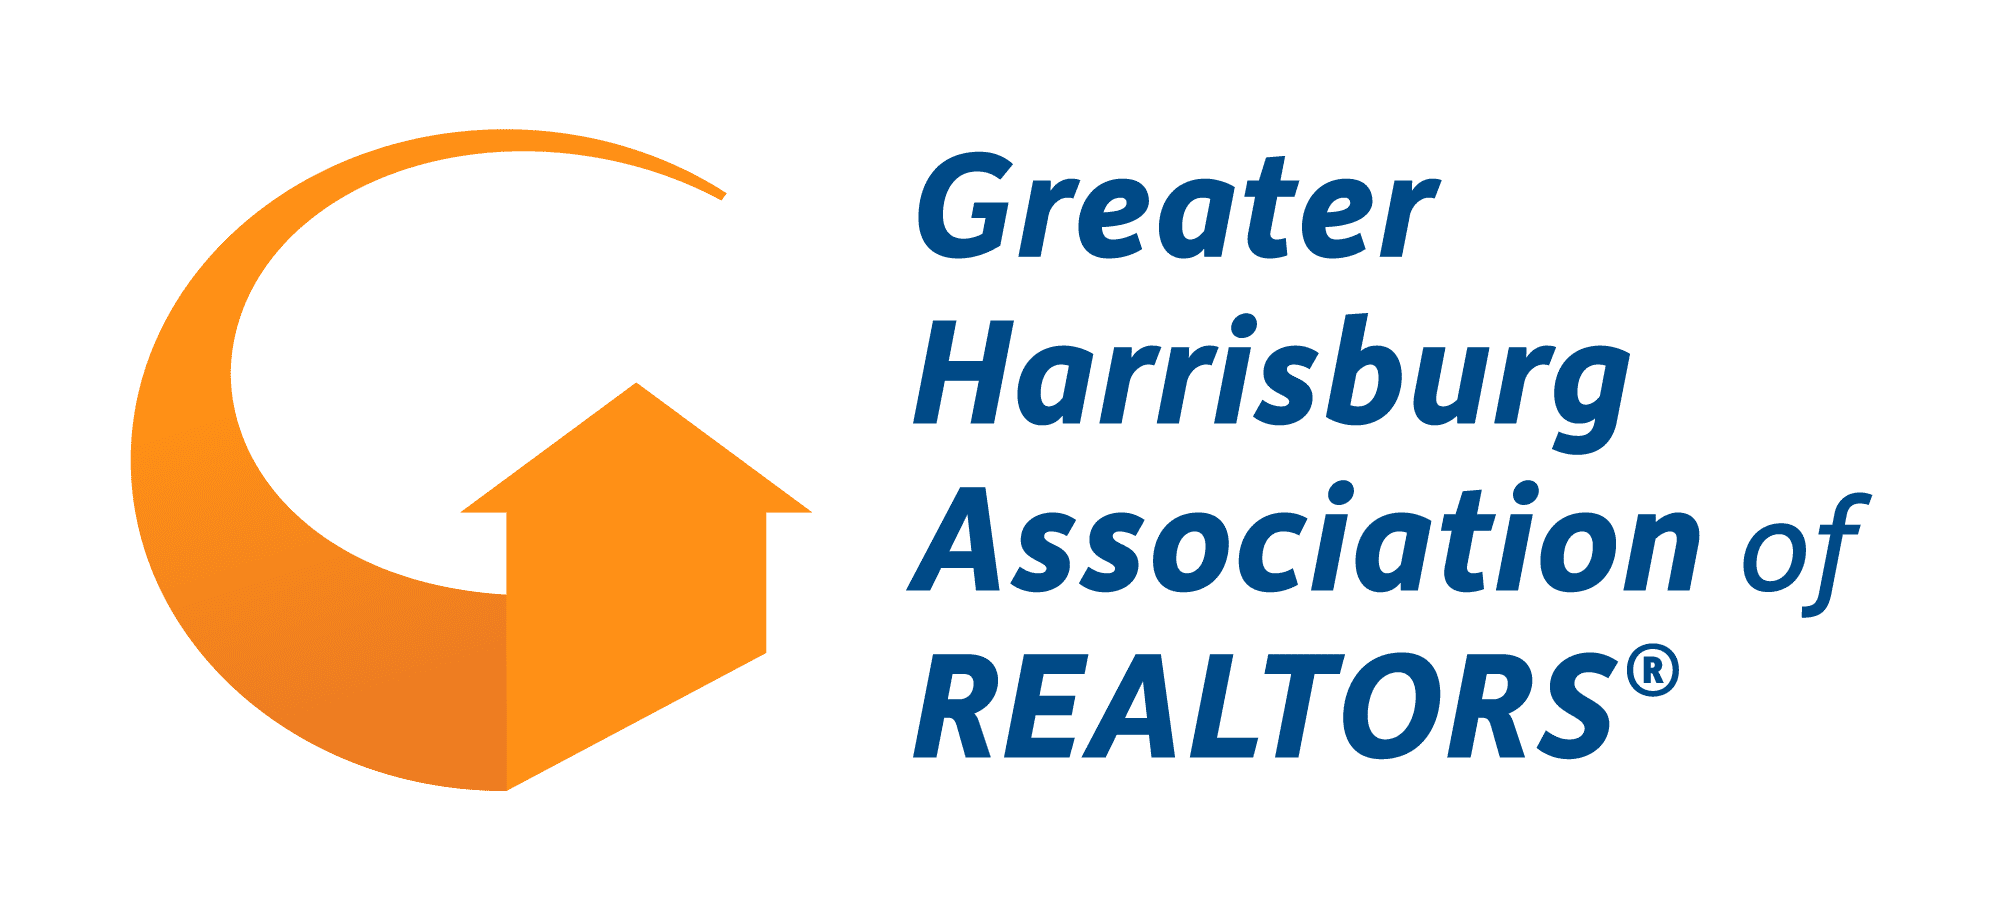 Greater Harrisburg Assoication of Realtors